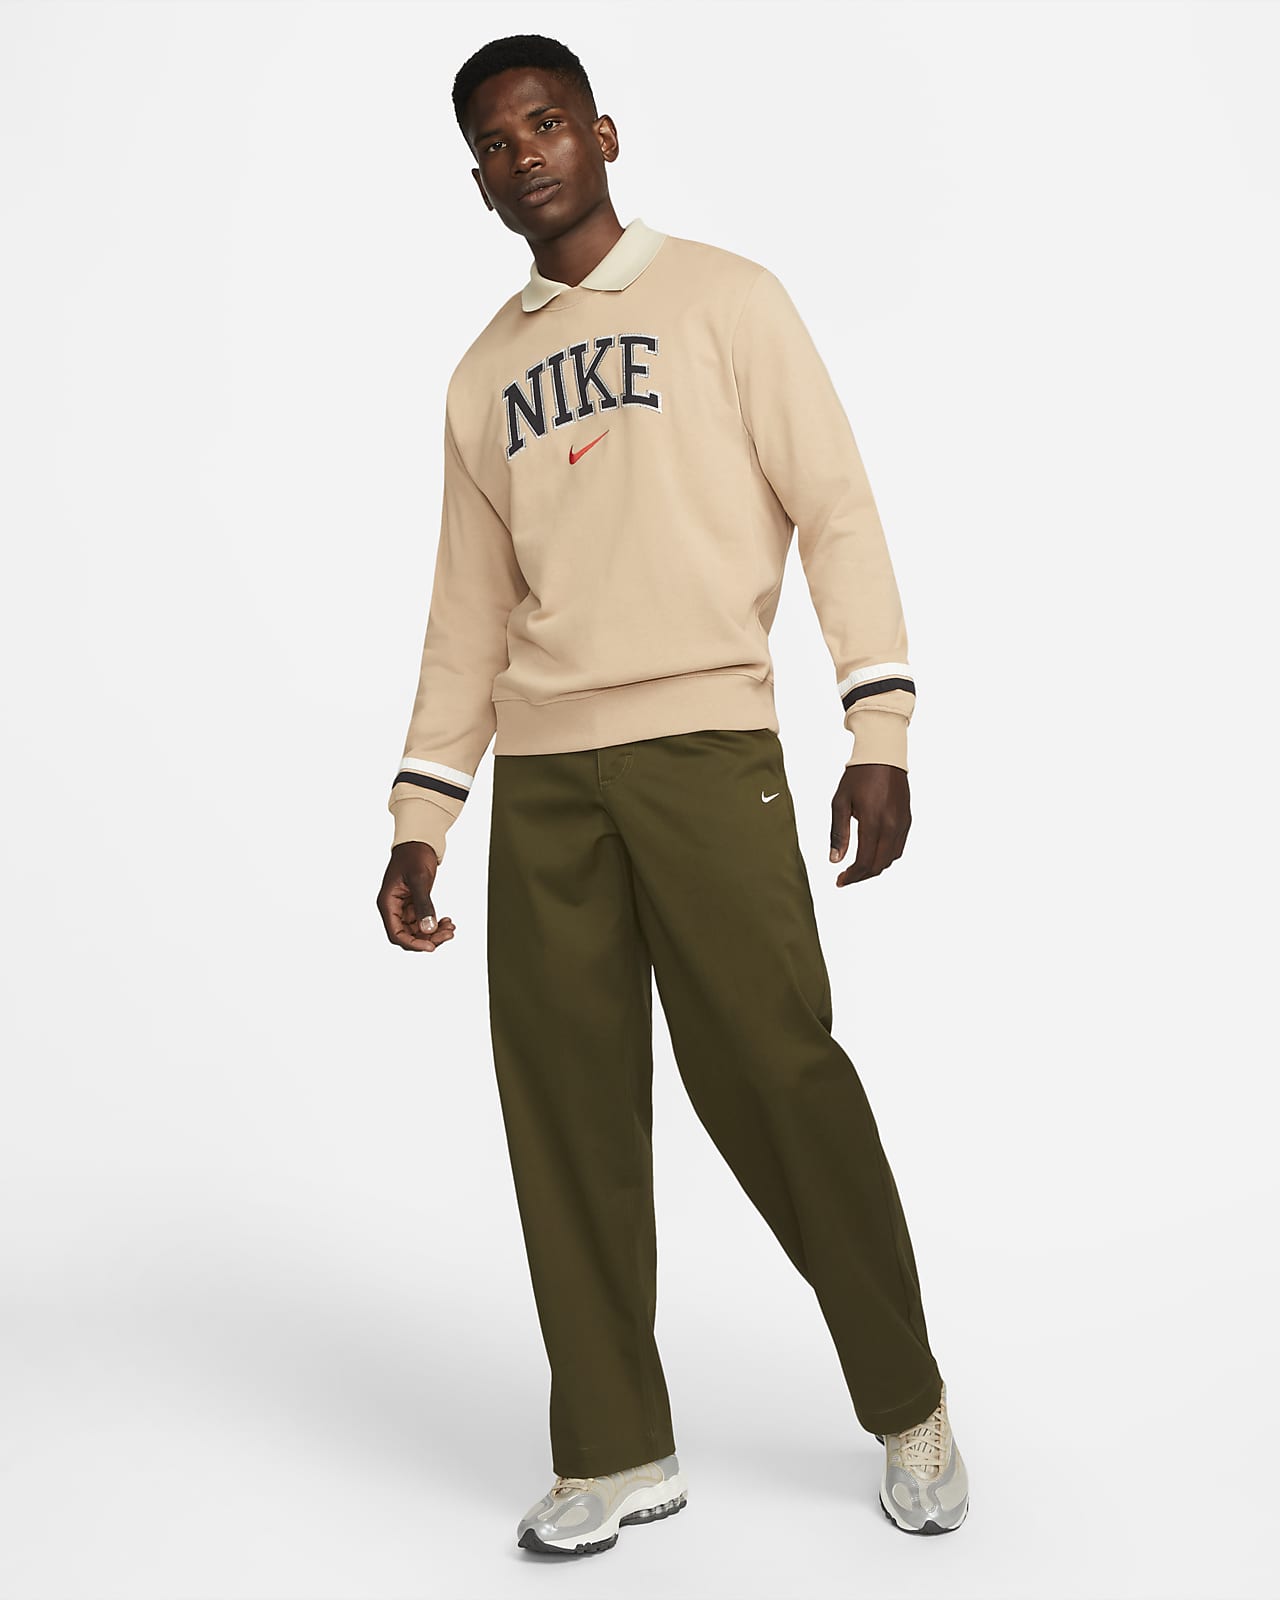 Ounce karakter In de genade van Nike Life Men's Unlined Cotton Chino Pants. Nike.com